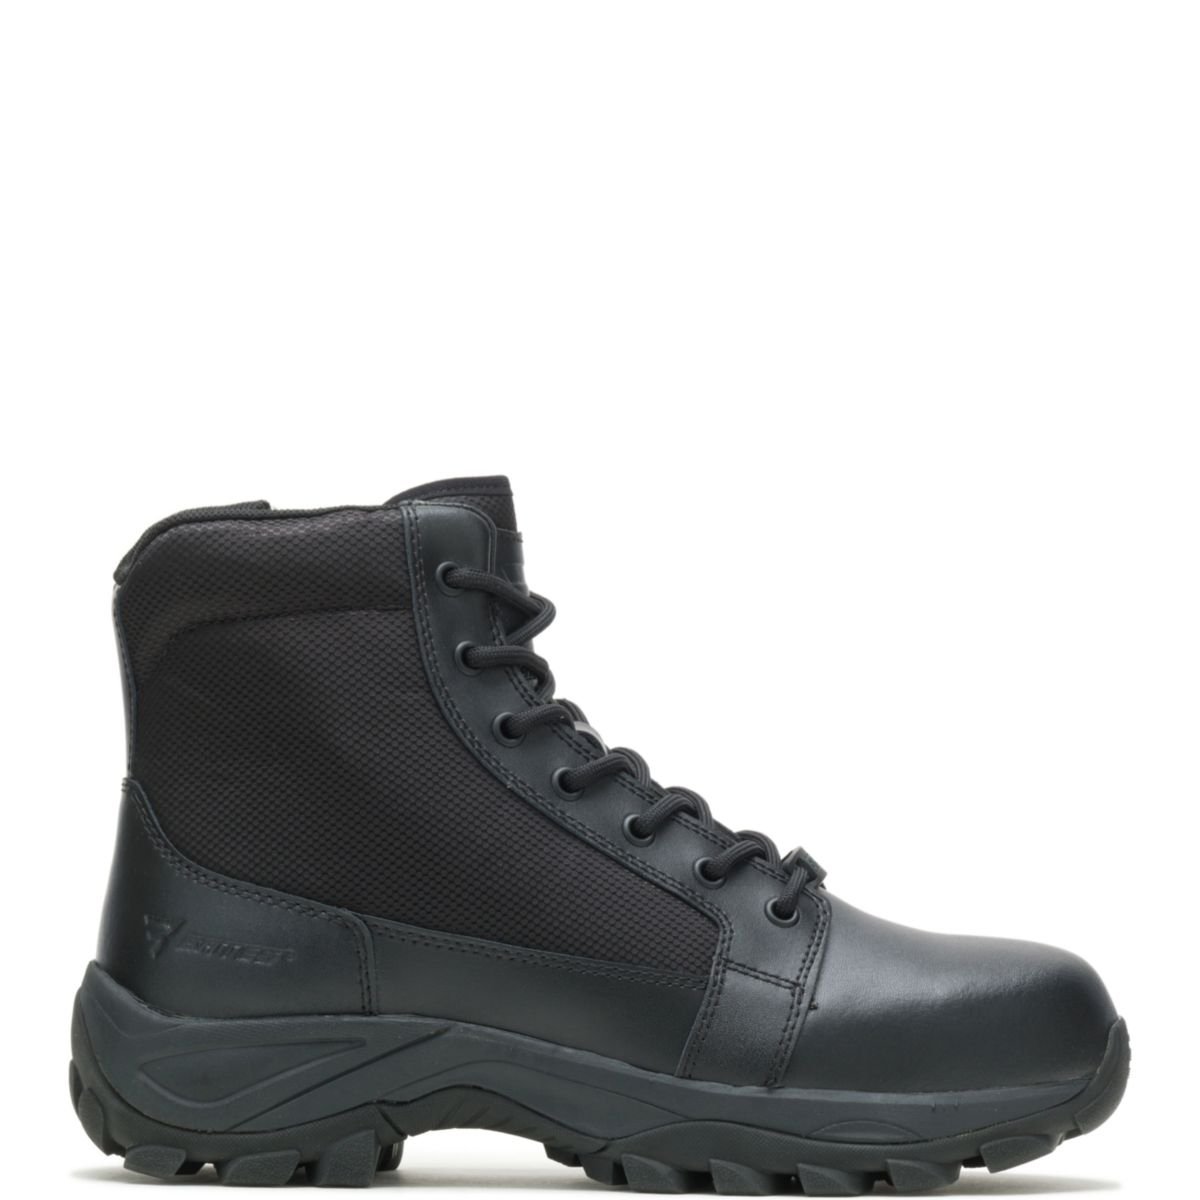 Bates Men's Fuse Zip 6-Inch Side Zip Steel Toe Work Boot Black - E06505 BLACK - BLACK, 9